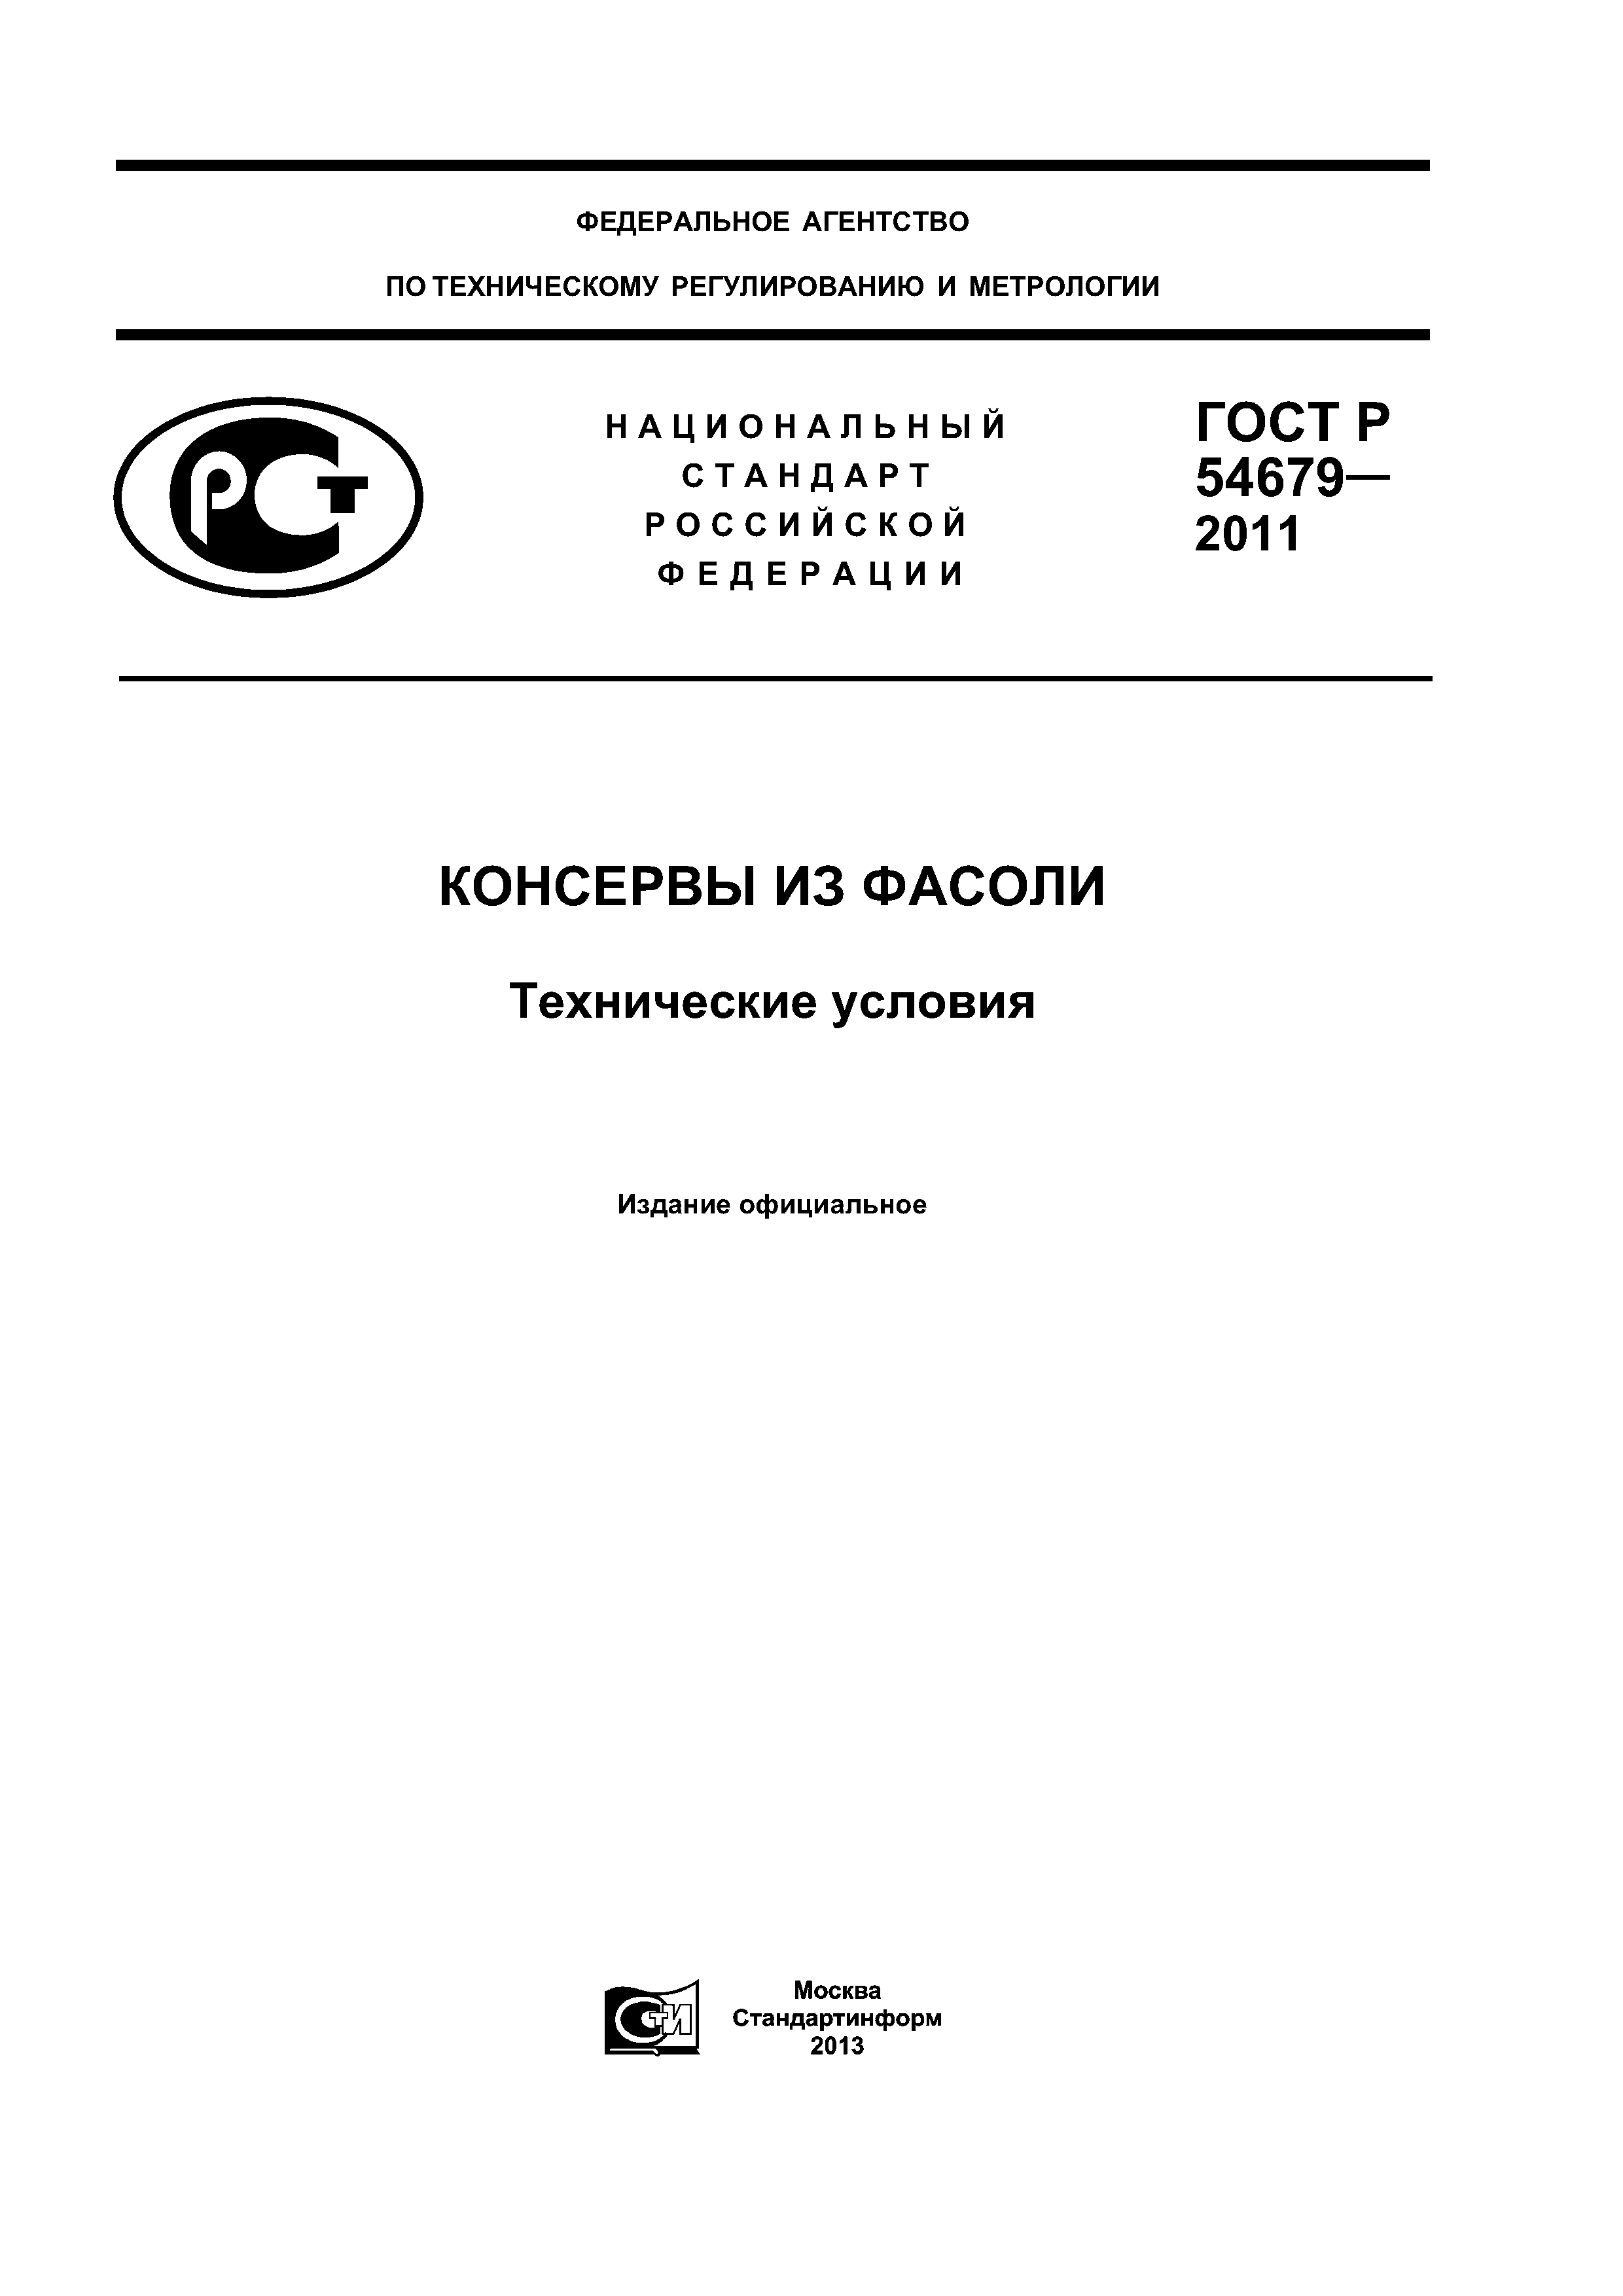 ГОСТ Р 54679-2011